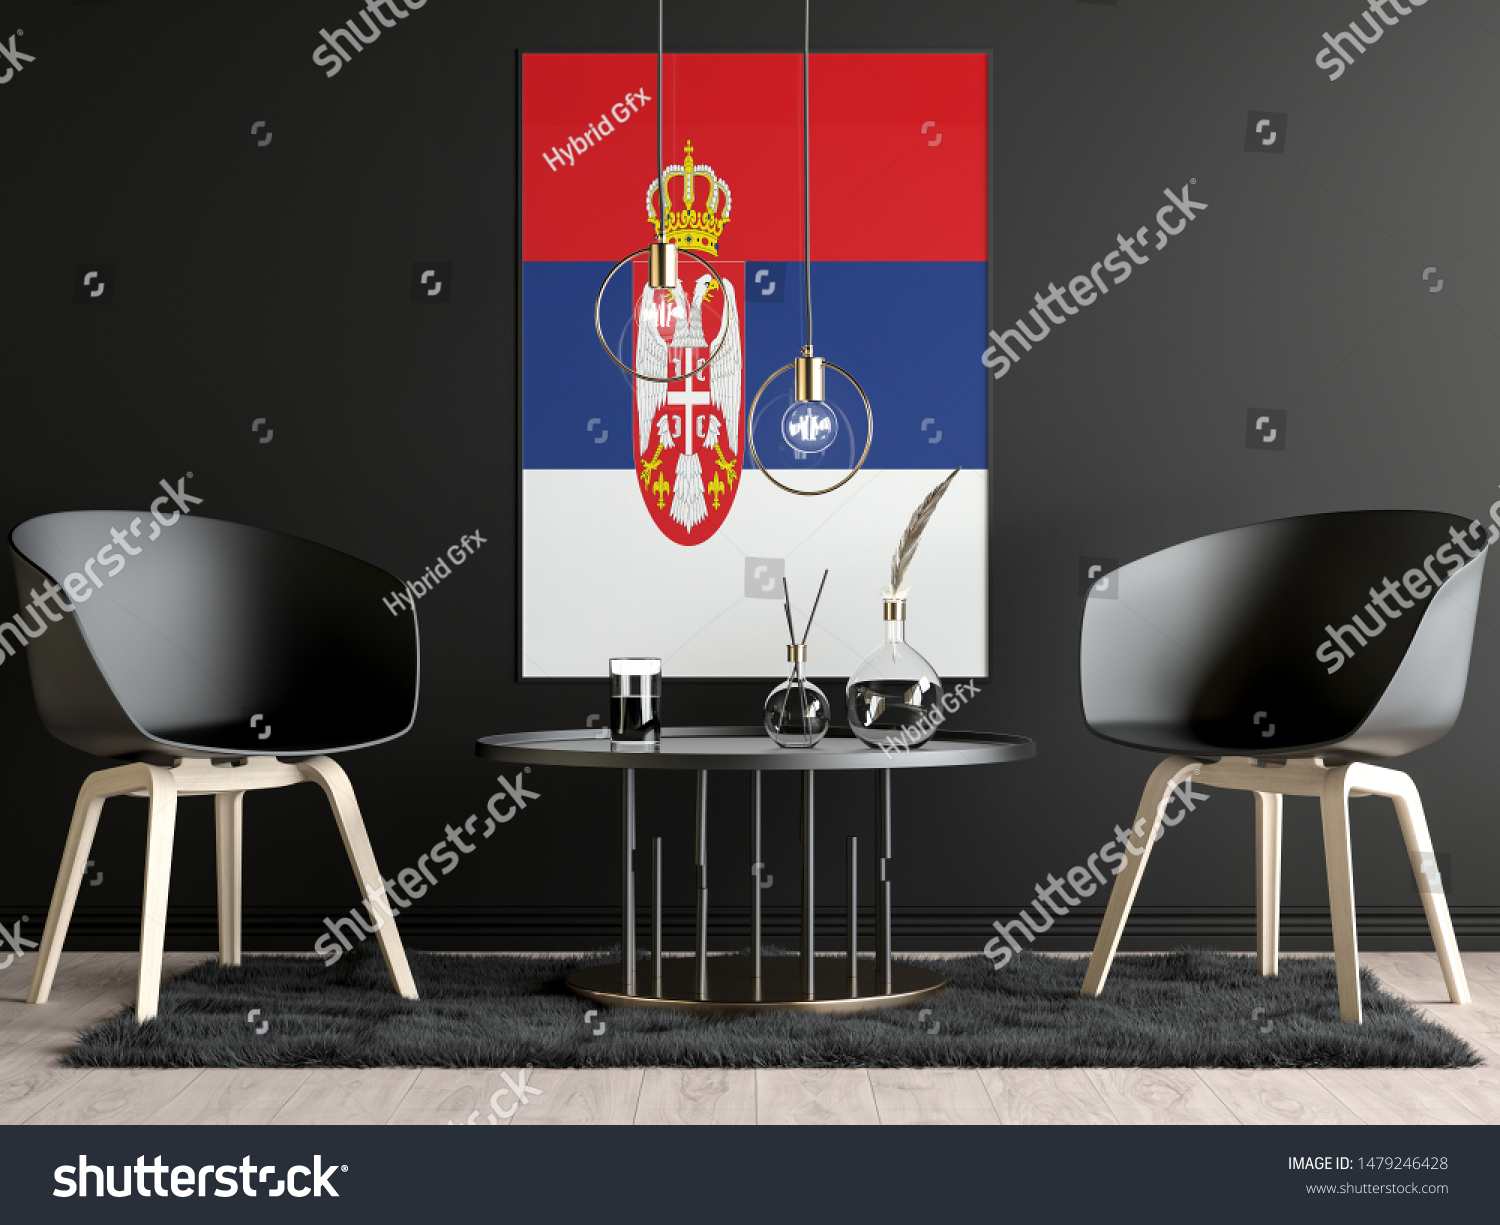 Serbia Flag in Room, Serbia Flag in Photo Frame #1479246428